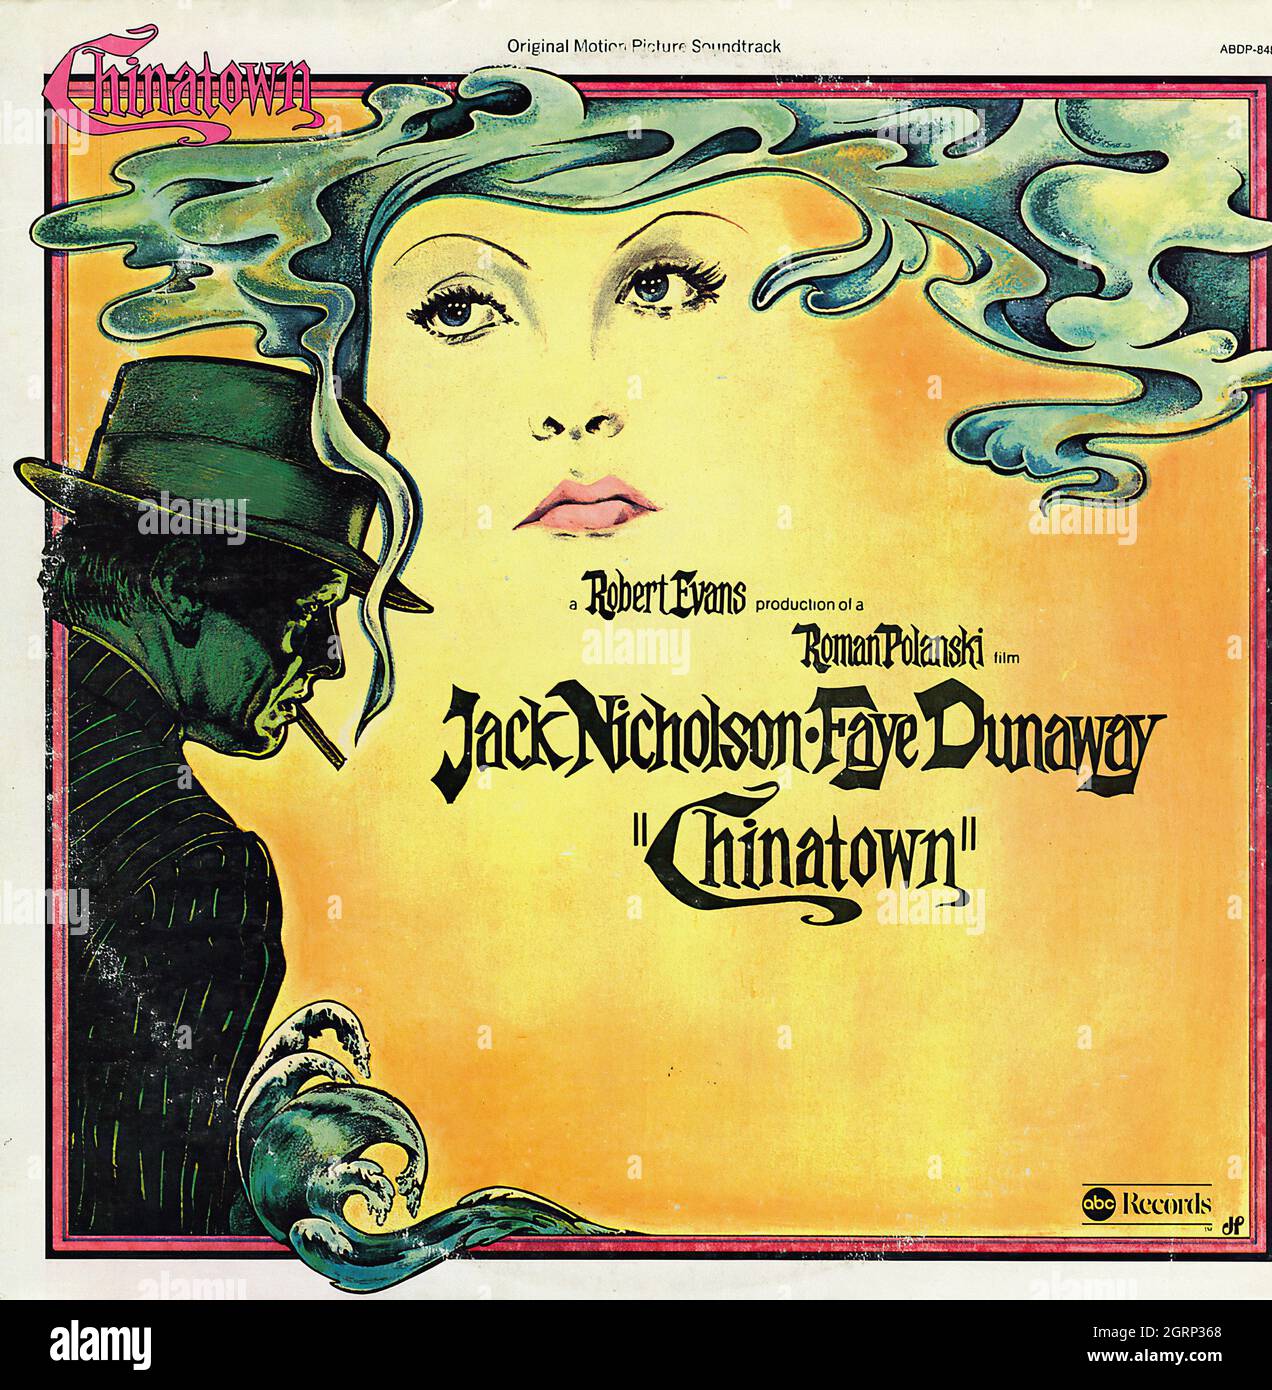 Chinatown - Vintage Soundtrack Vinyl Album Stock Photo